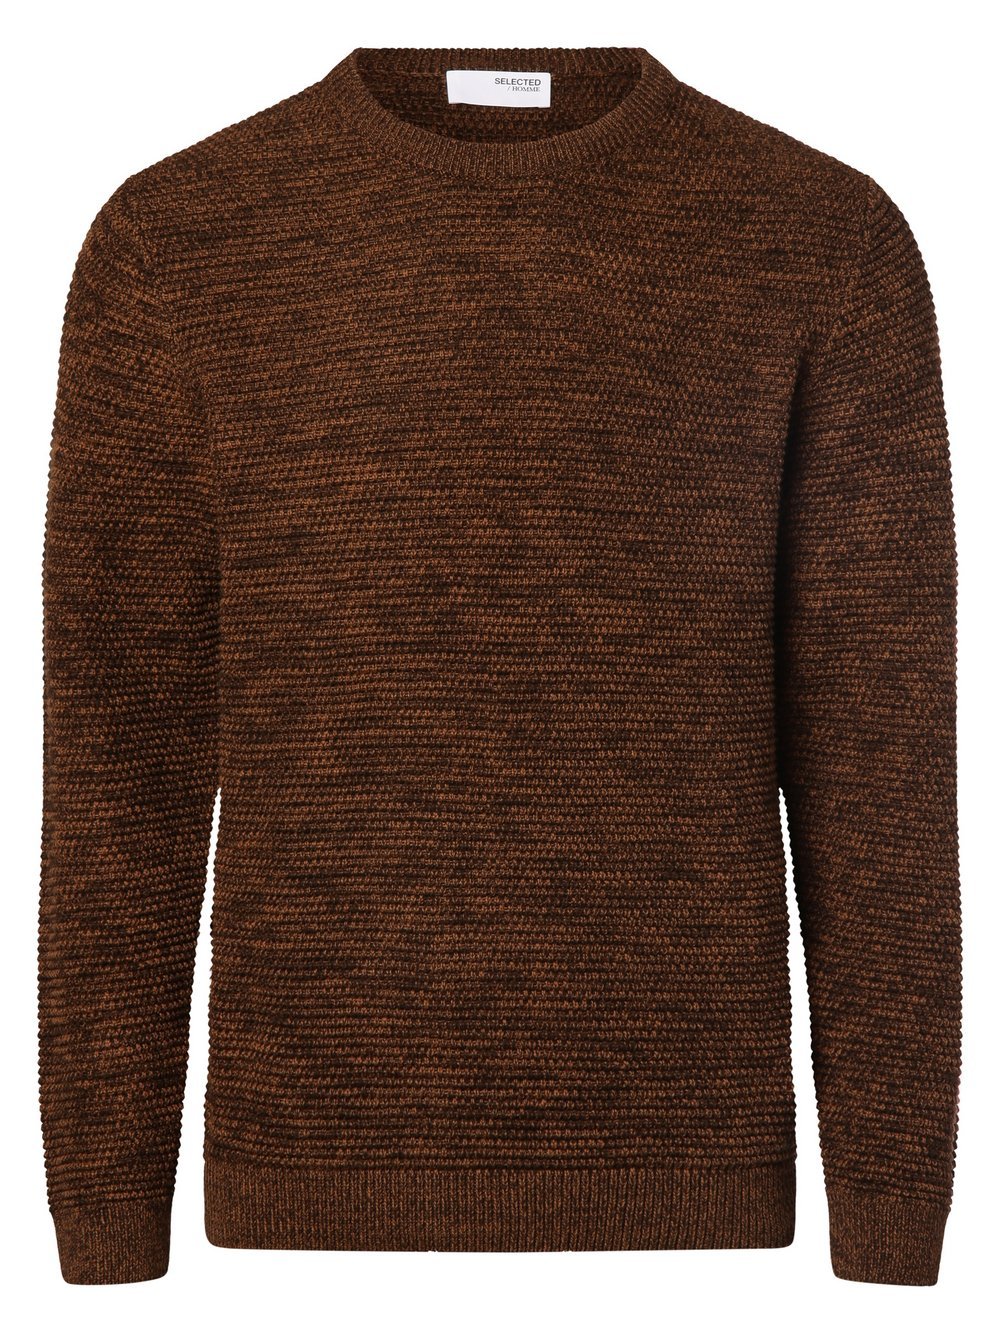 Selected - Sweter męski  SLHVince, brązowy